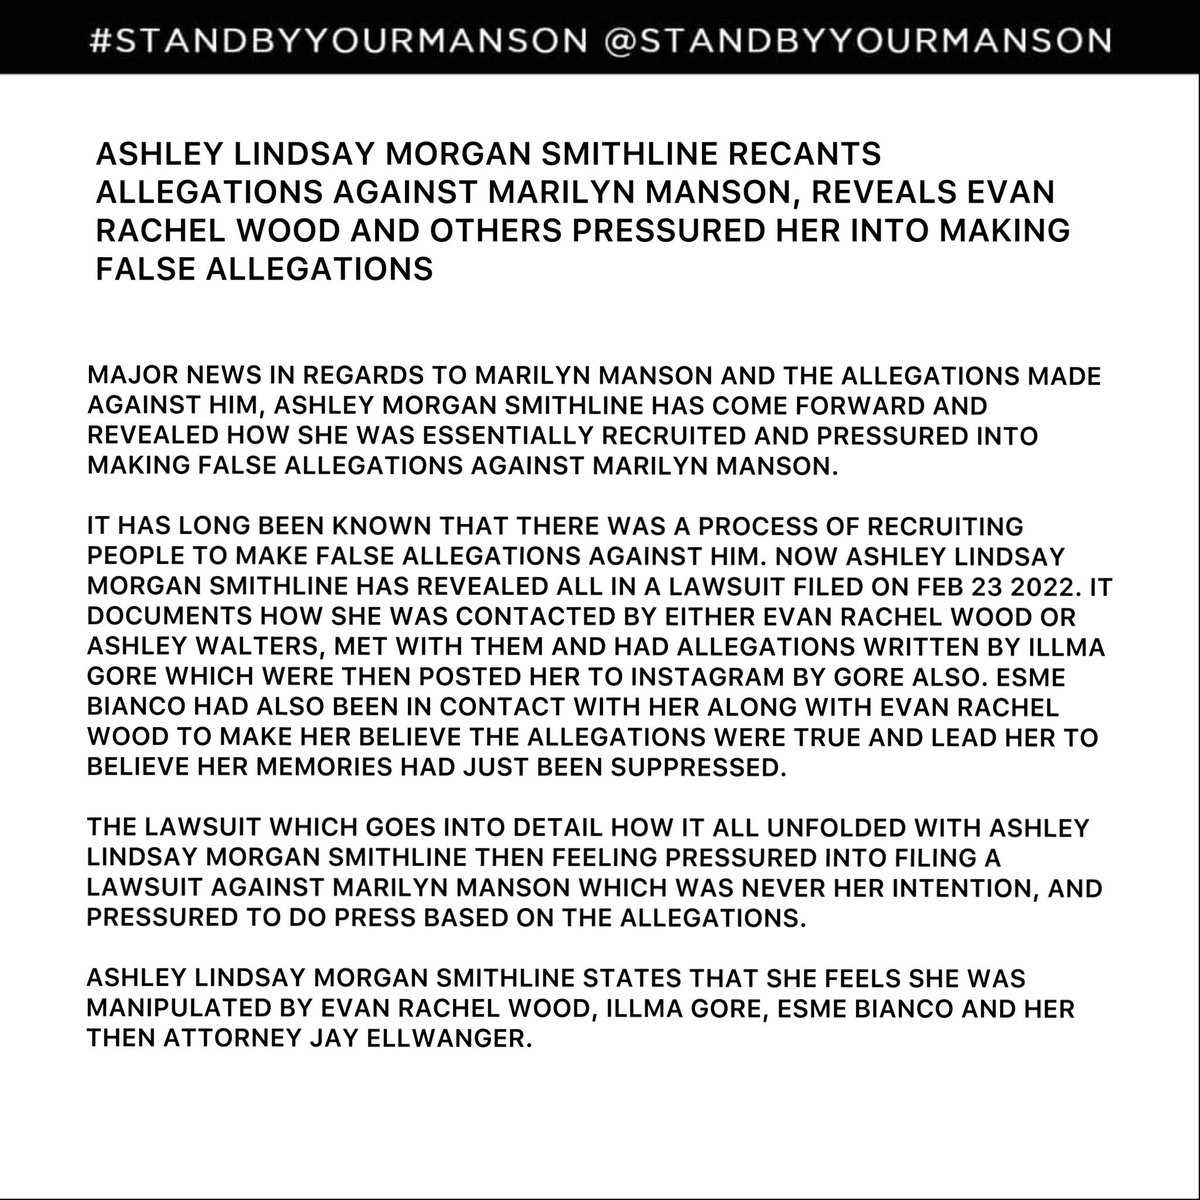 #marilynmanson #MarilynMansonIsInnocent #standbyyourmanson #evanrachelwood #esmebianco #jayellwanger #illmagore